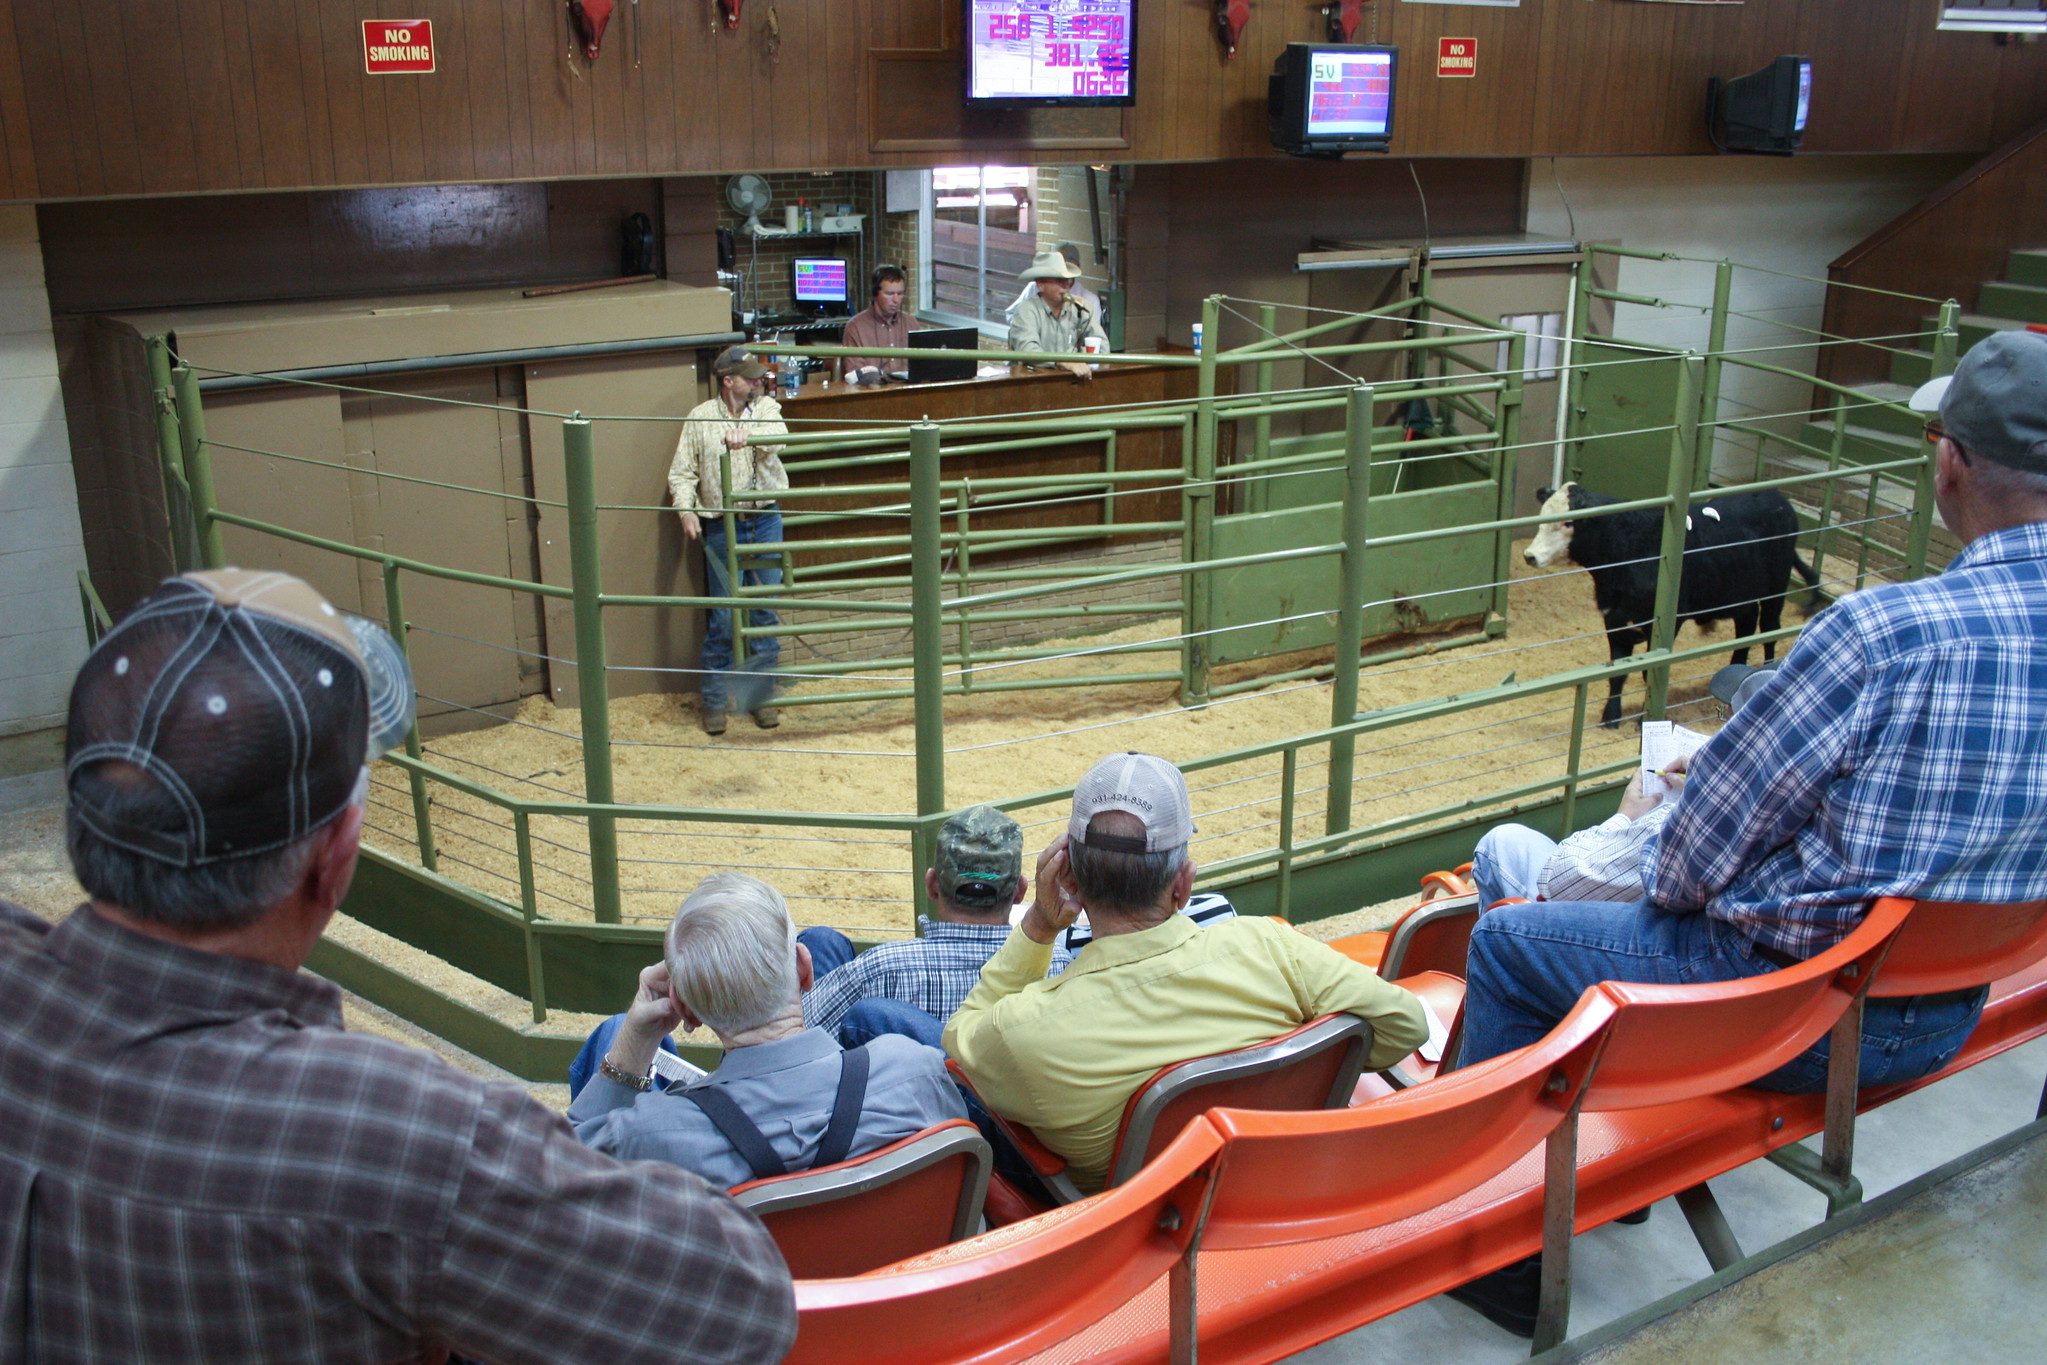 cattle auction